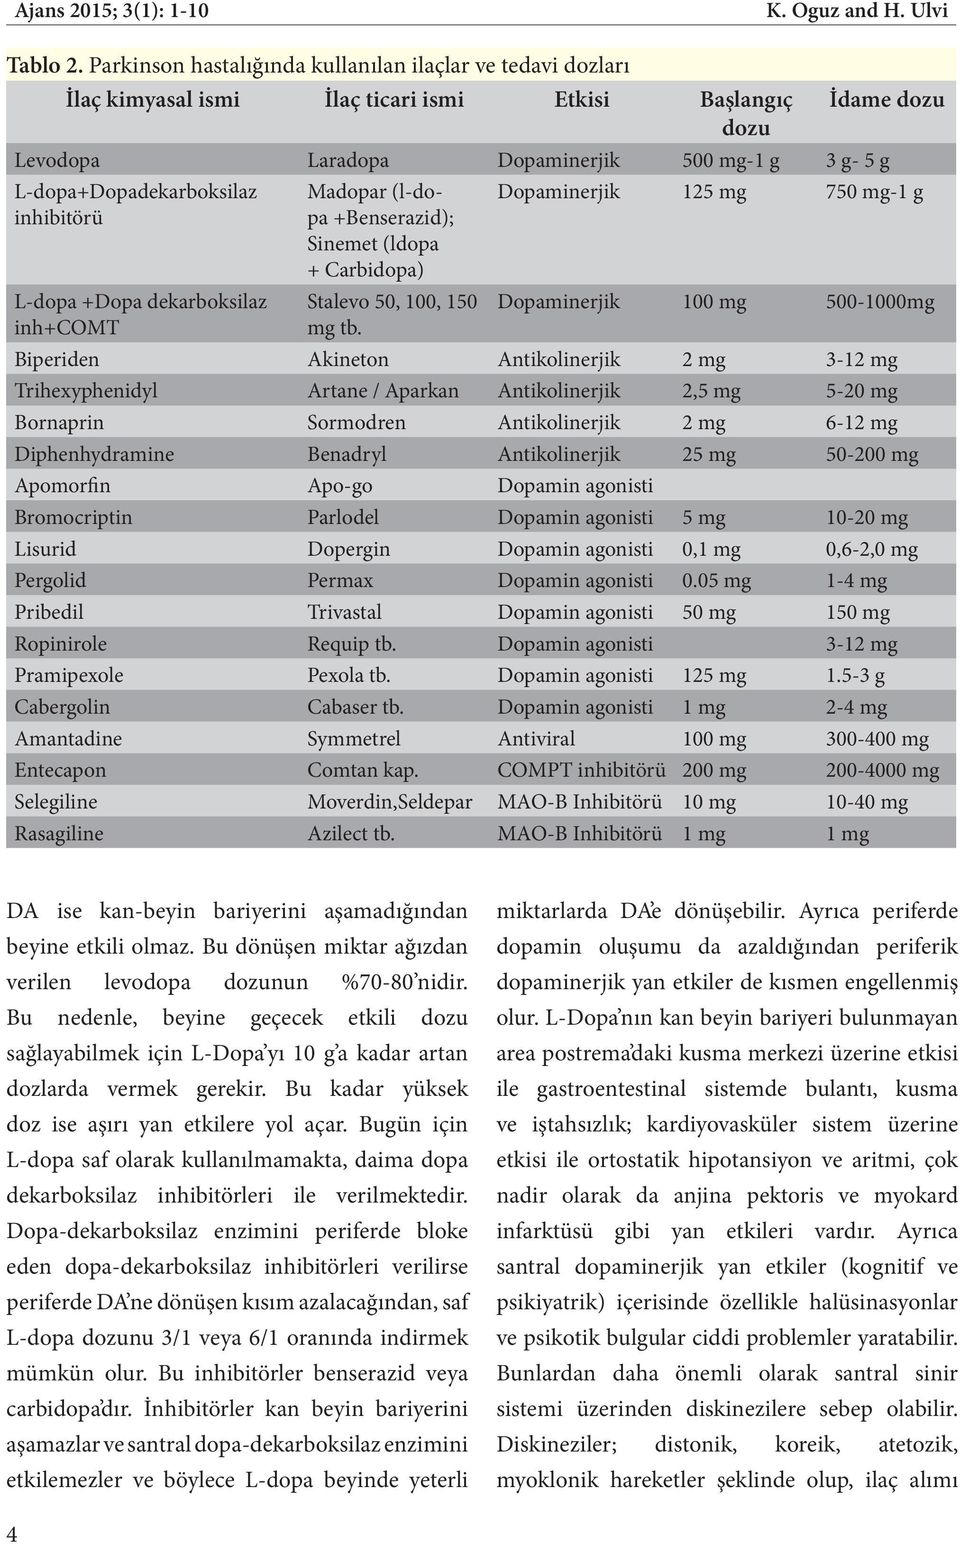 L-dopa+Dopadekarboksilaz inhibitörü L-dopa +Dopa dekarboksilaz inh+comt Madopar (l-dopa +Benserazid); Sinemet (ldopa + Carbidopa) Stalevo 50, 100, 150 mg tb.